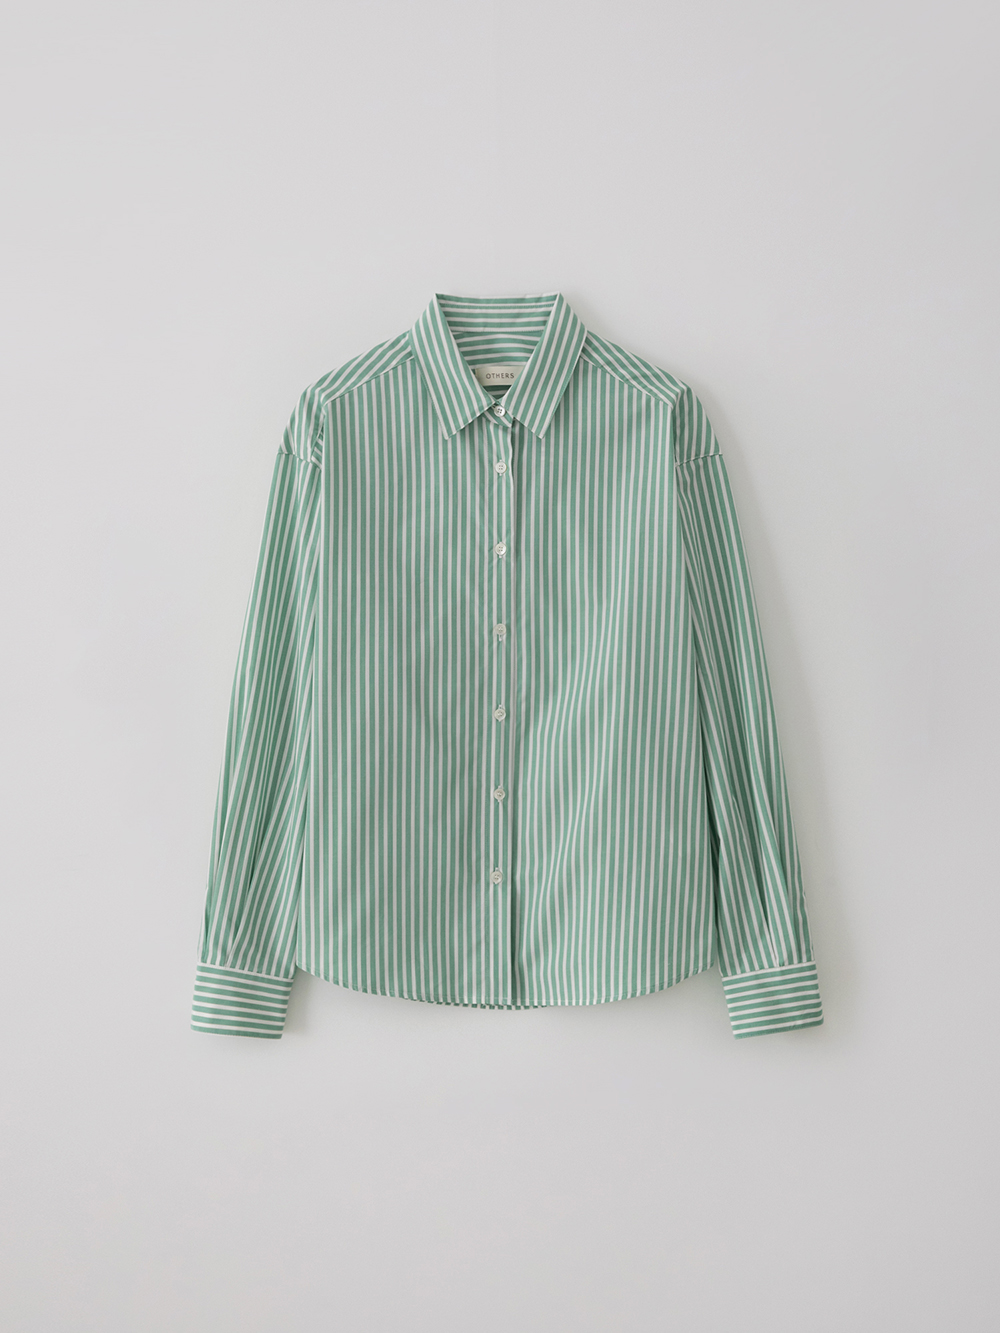 Stripe shirt by ICHIMEN (green)